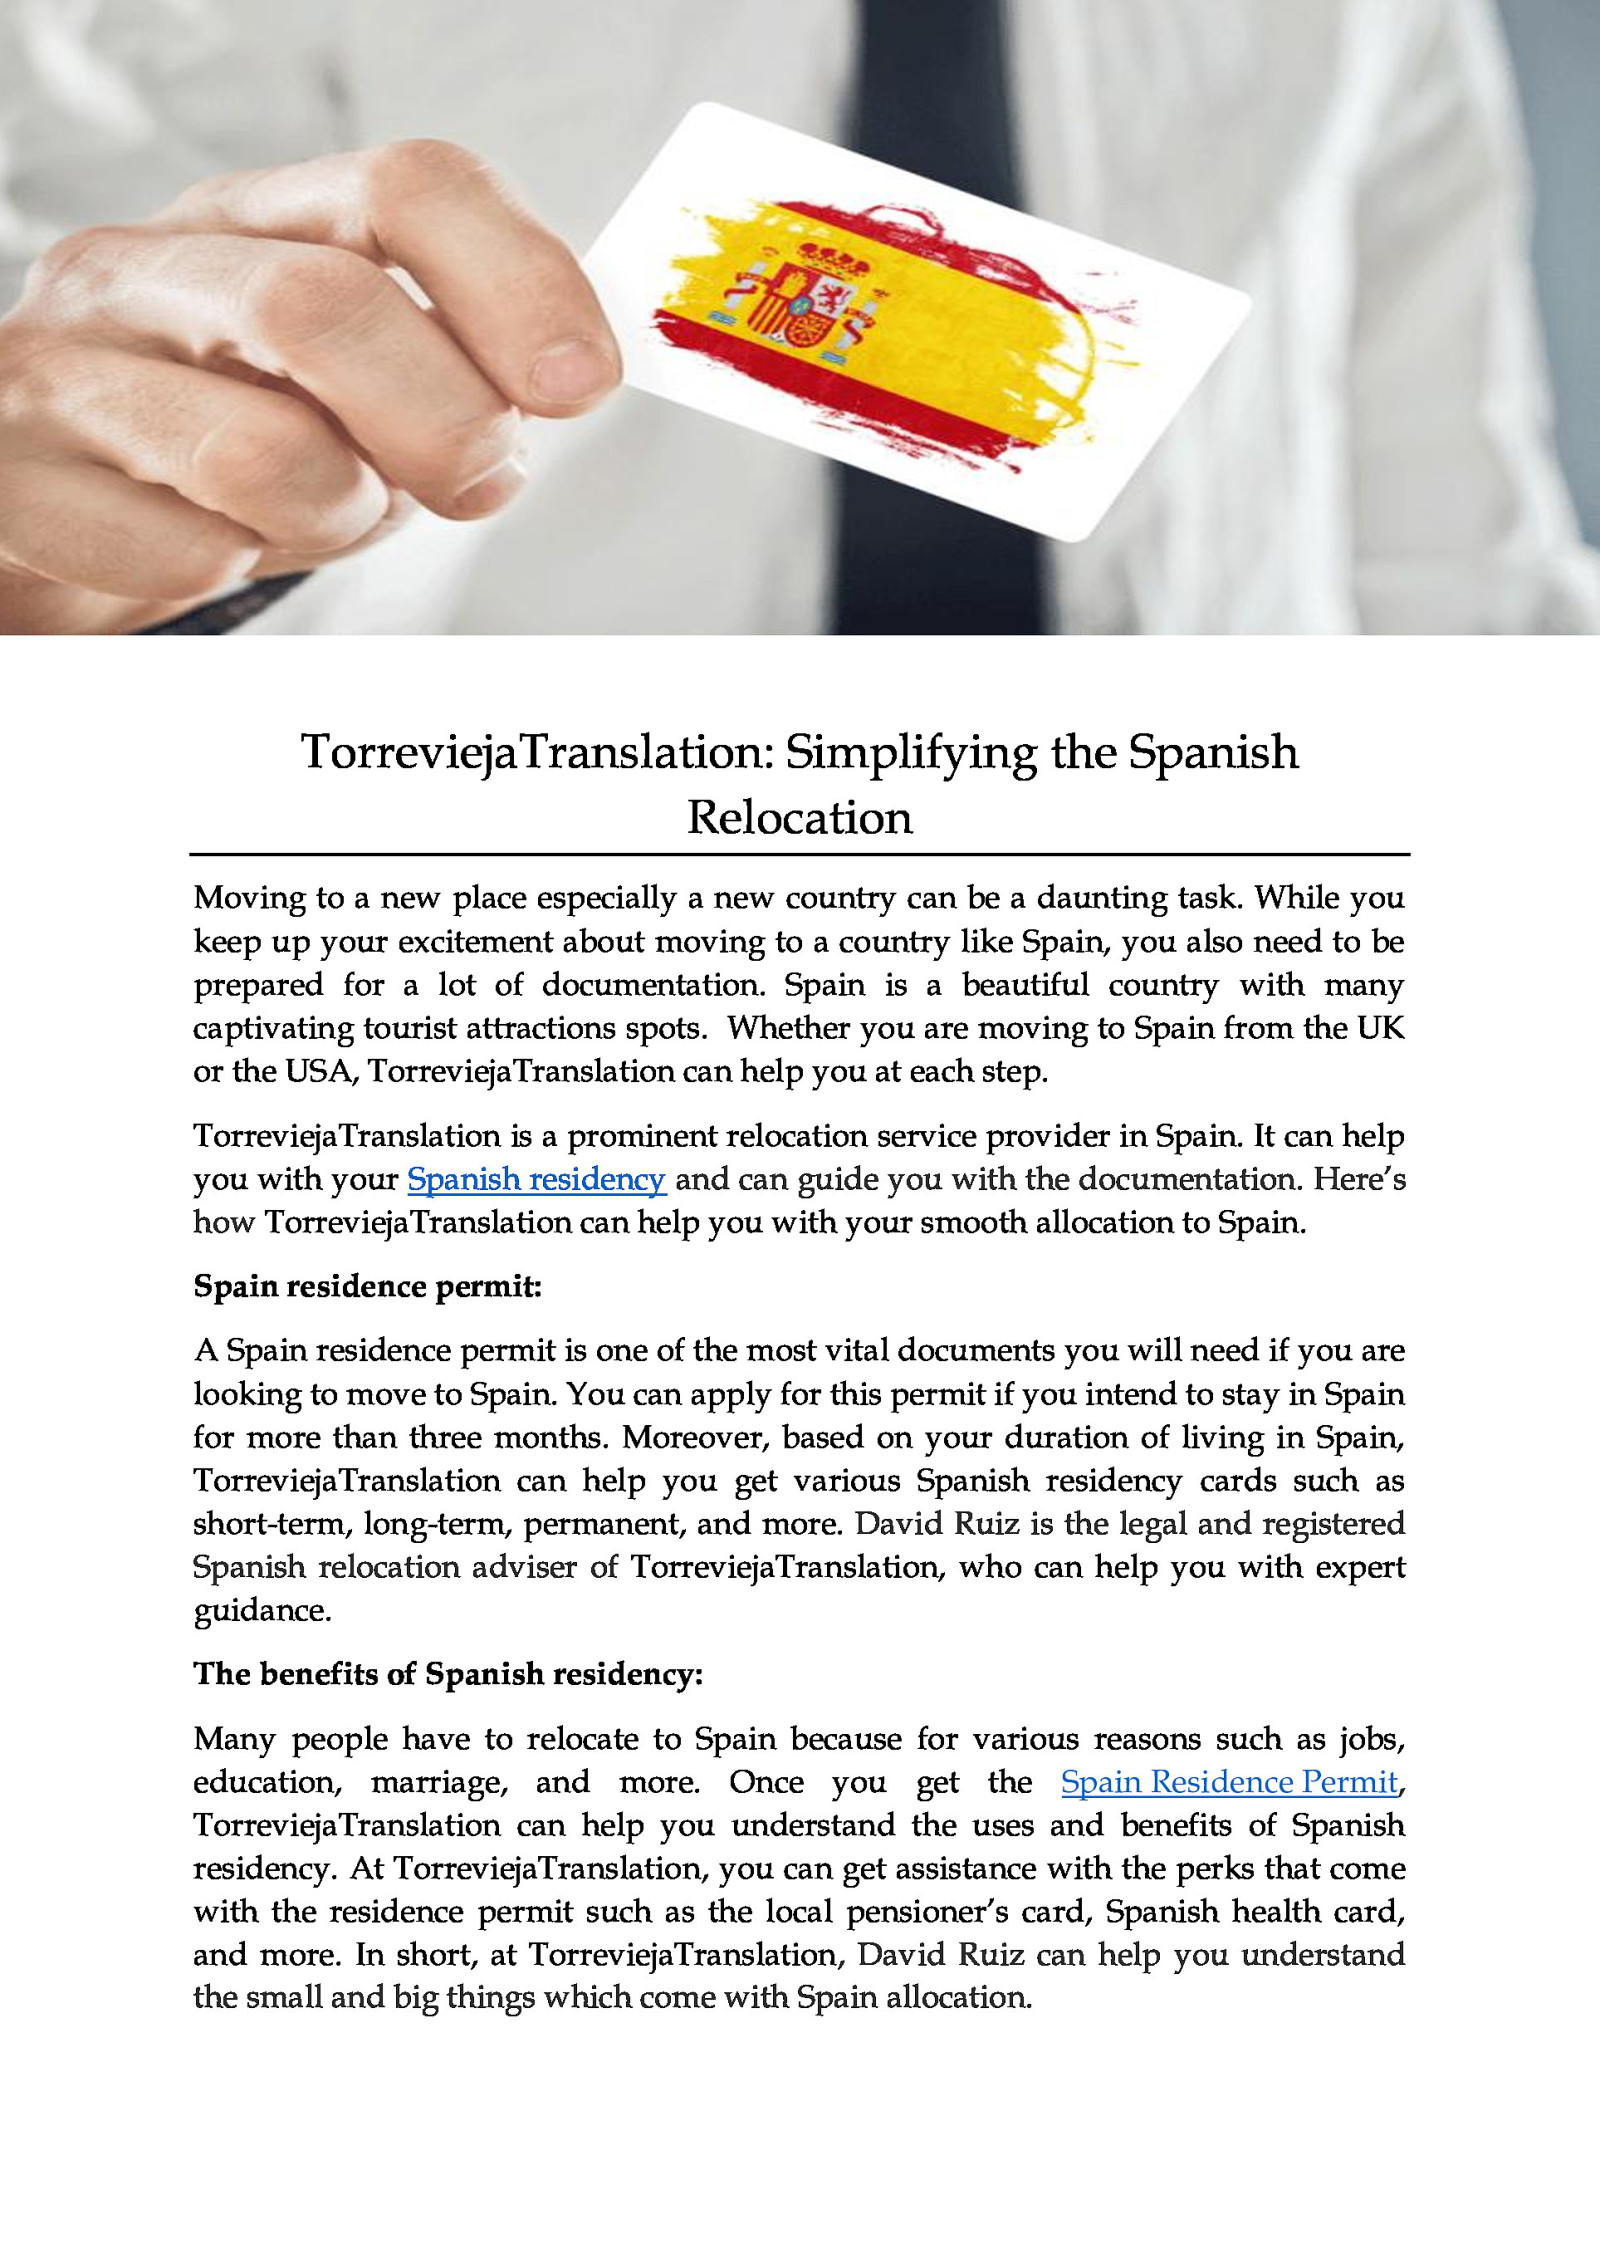 TorreviejaTranslation: Simplifying the Spanish Relocation